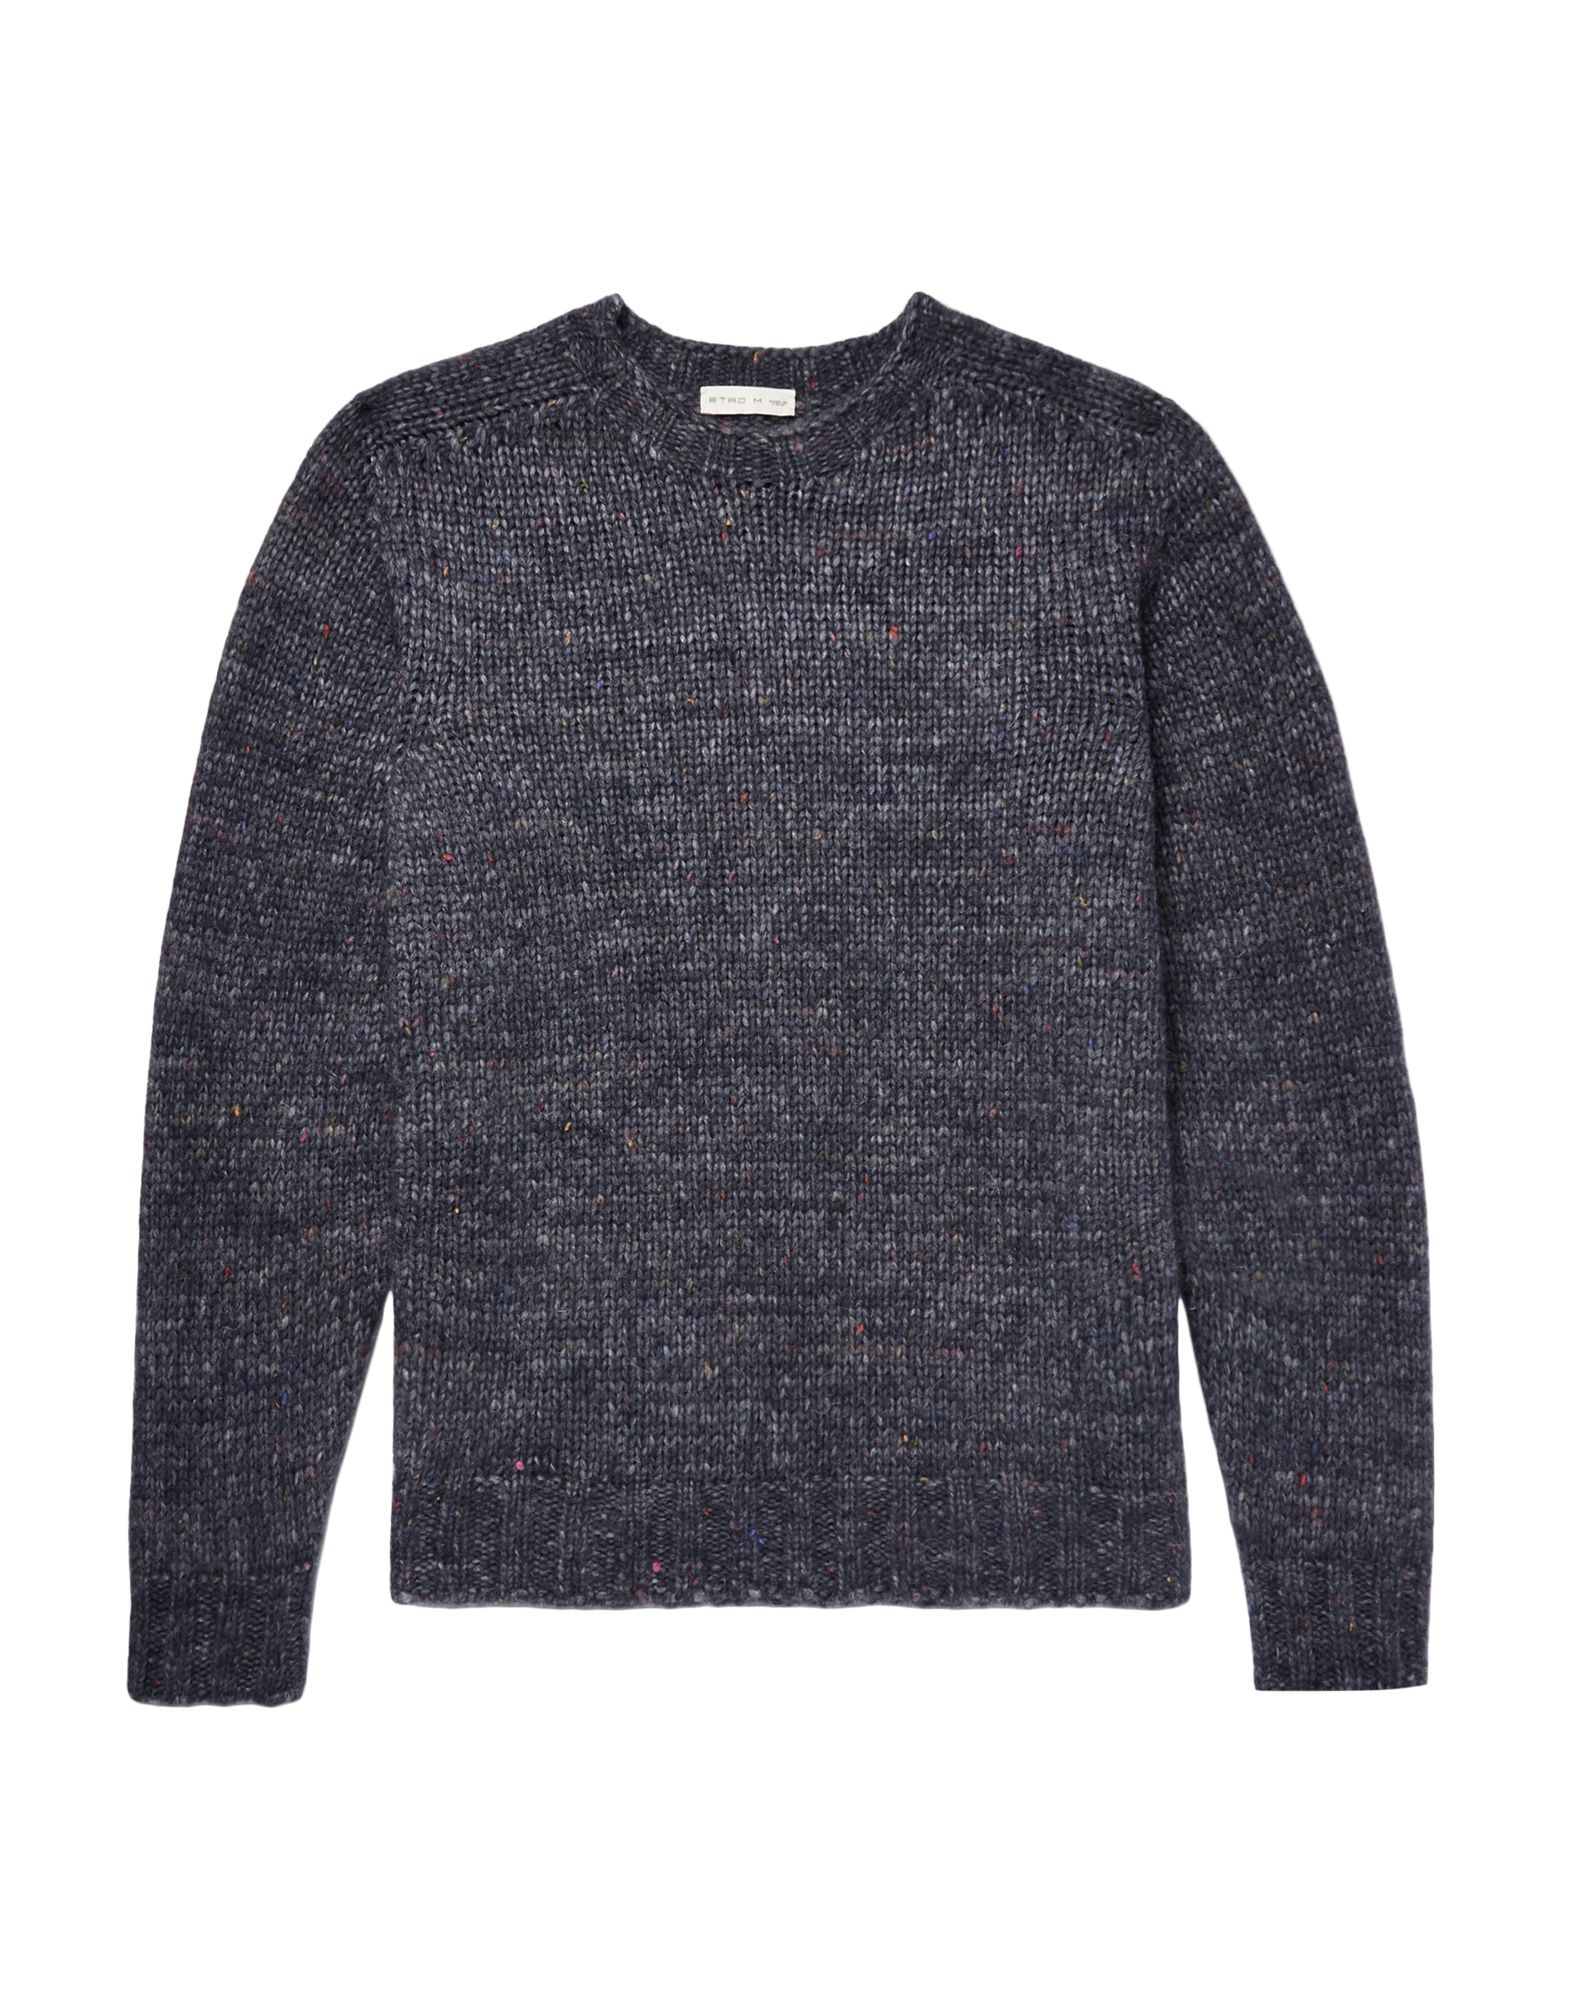 ETRO Sweaters - Item 39983822